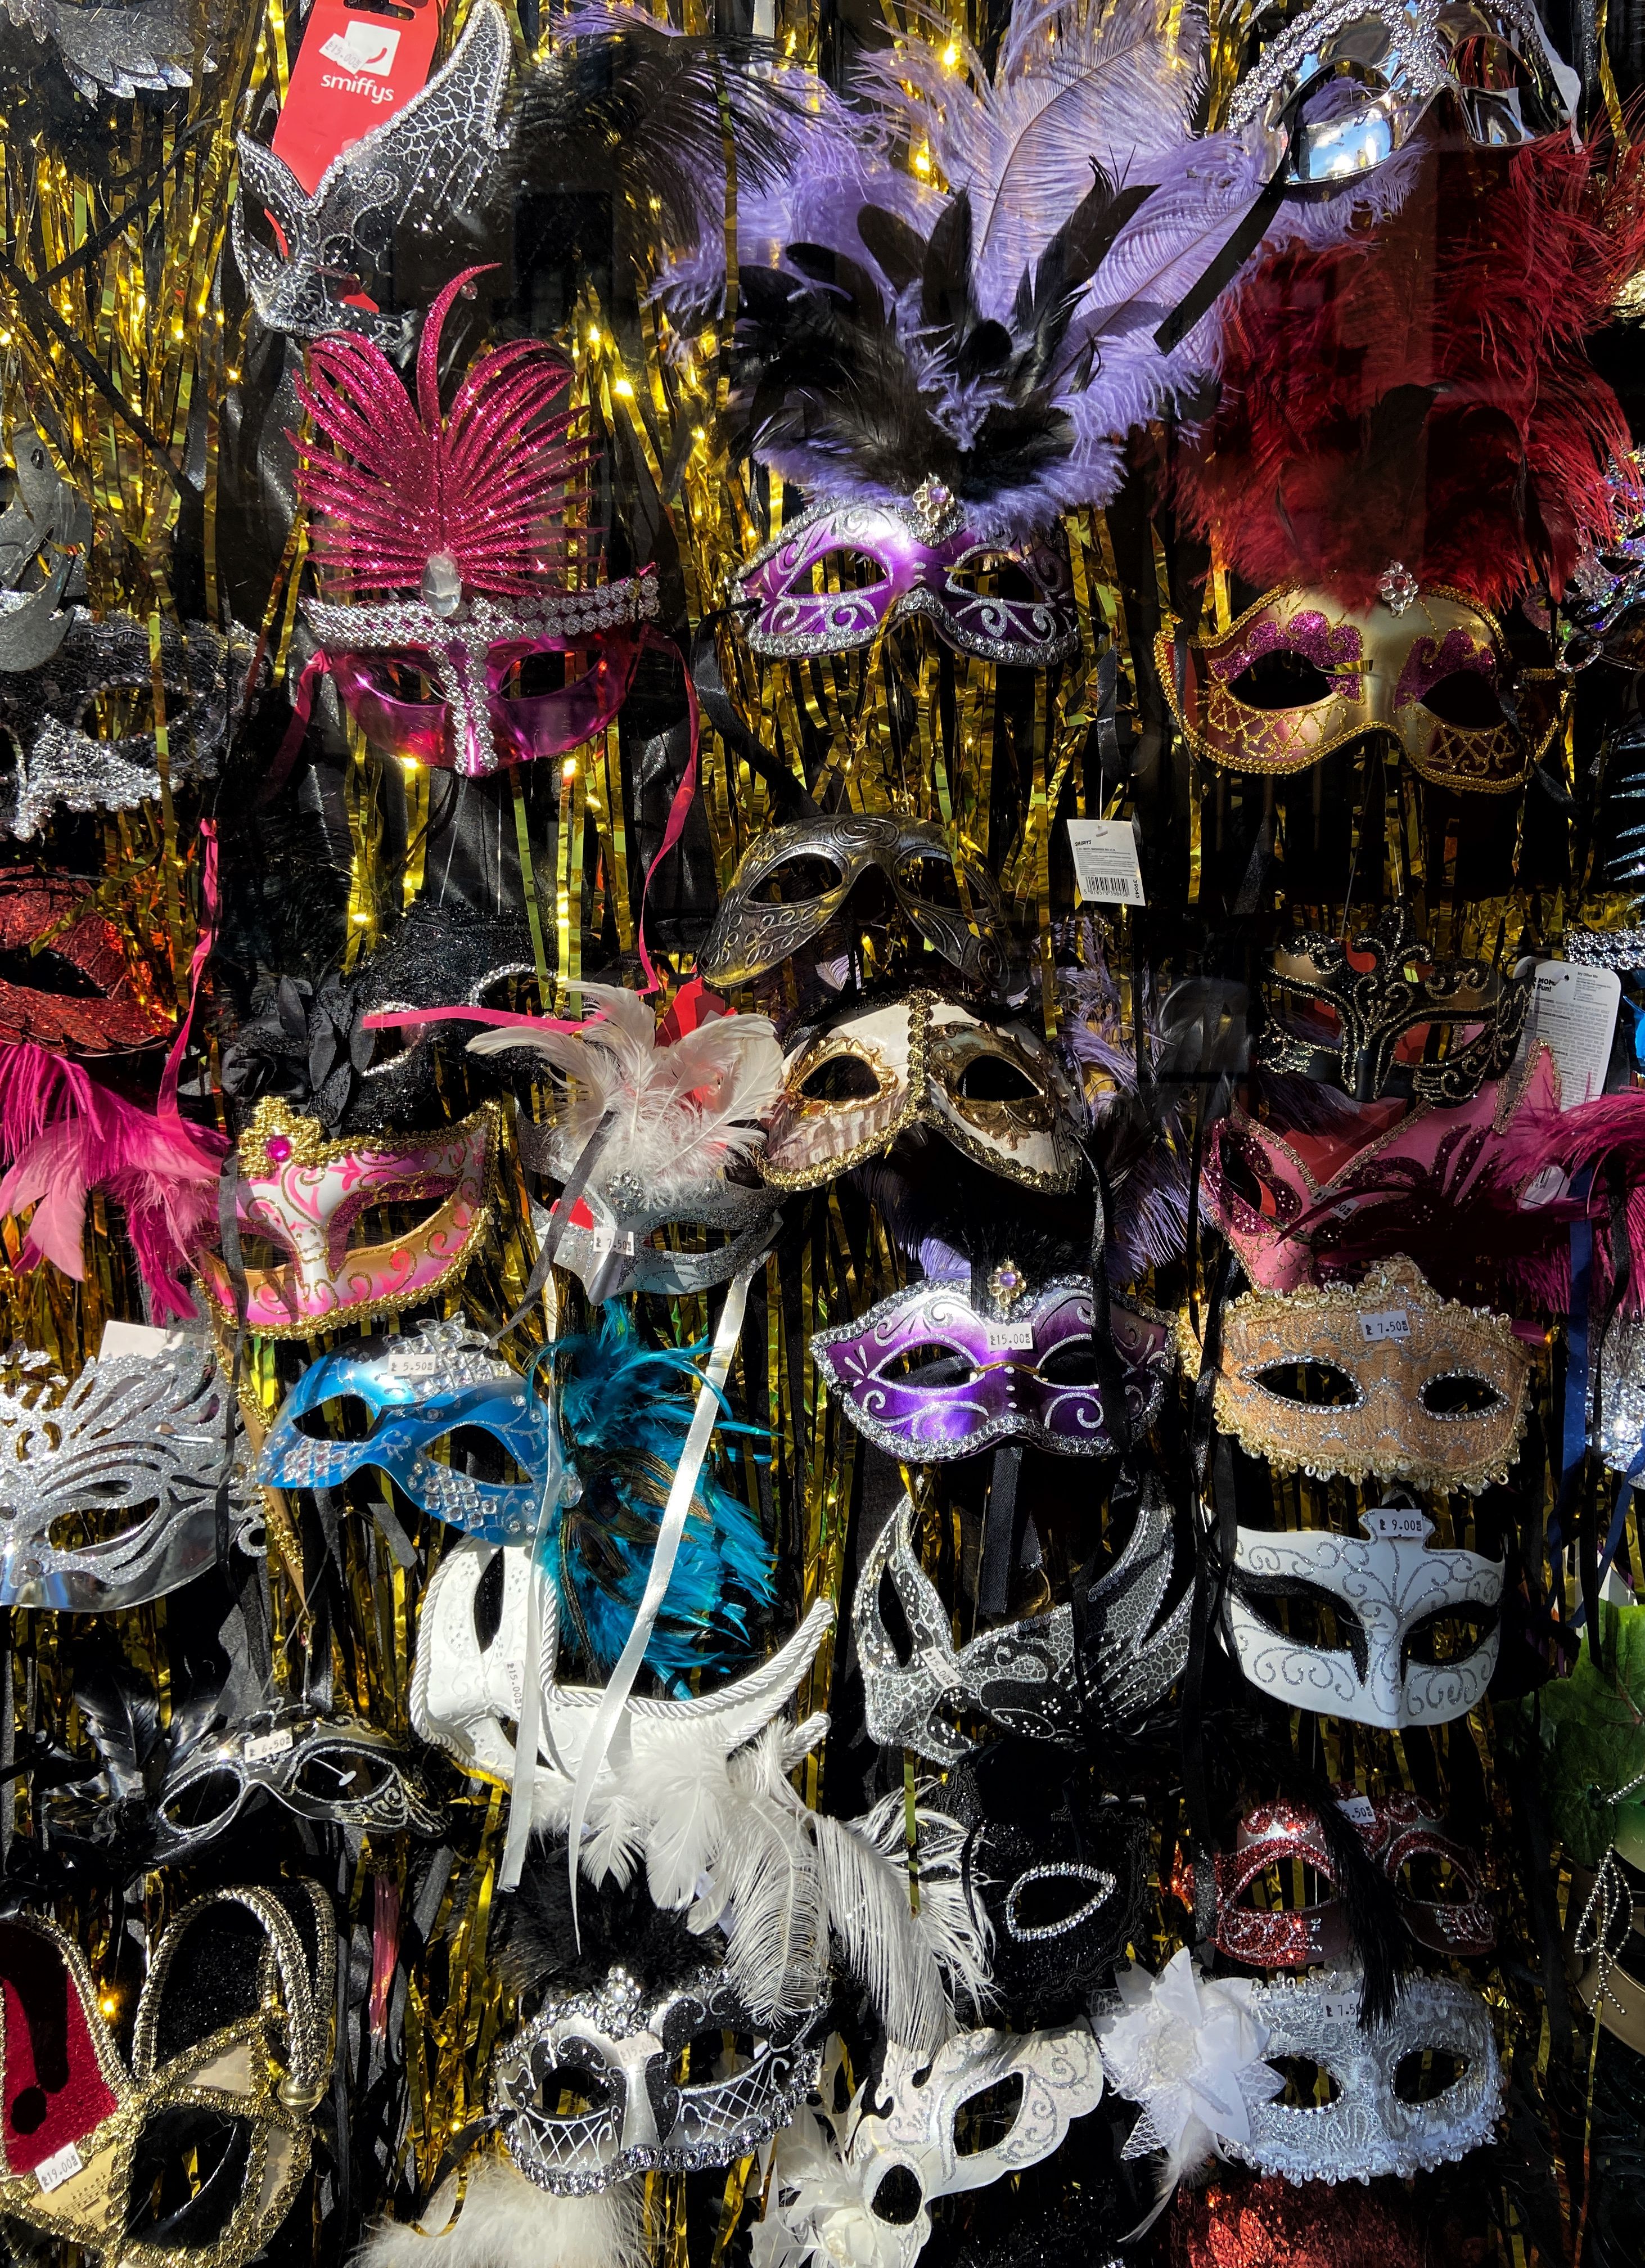 EuropaPress 2658535 mascaras carnaval tienda disfraces madrid espana 19 febrero 2020